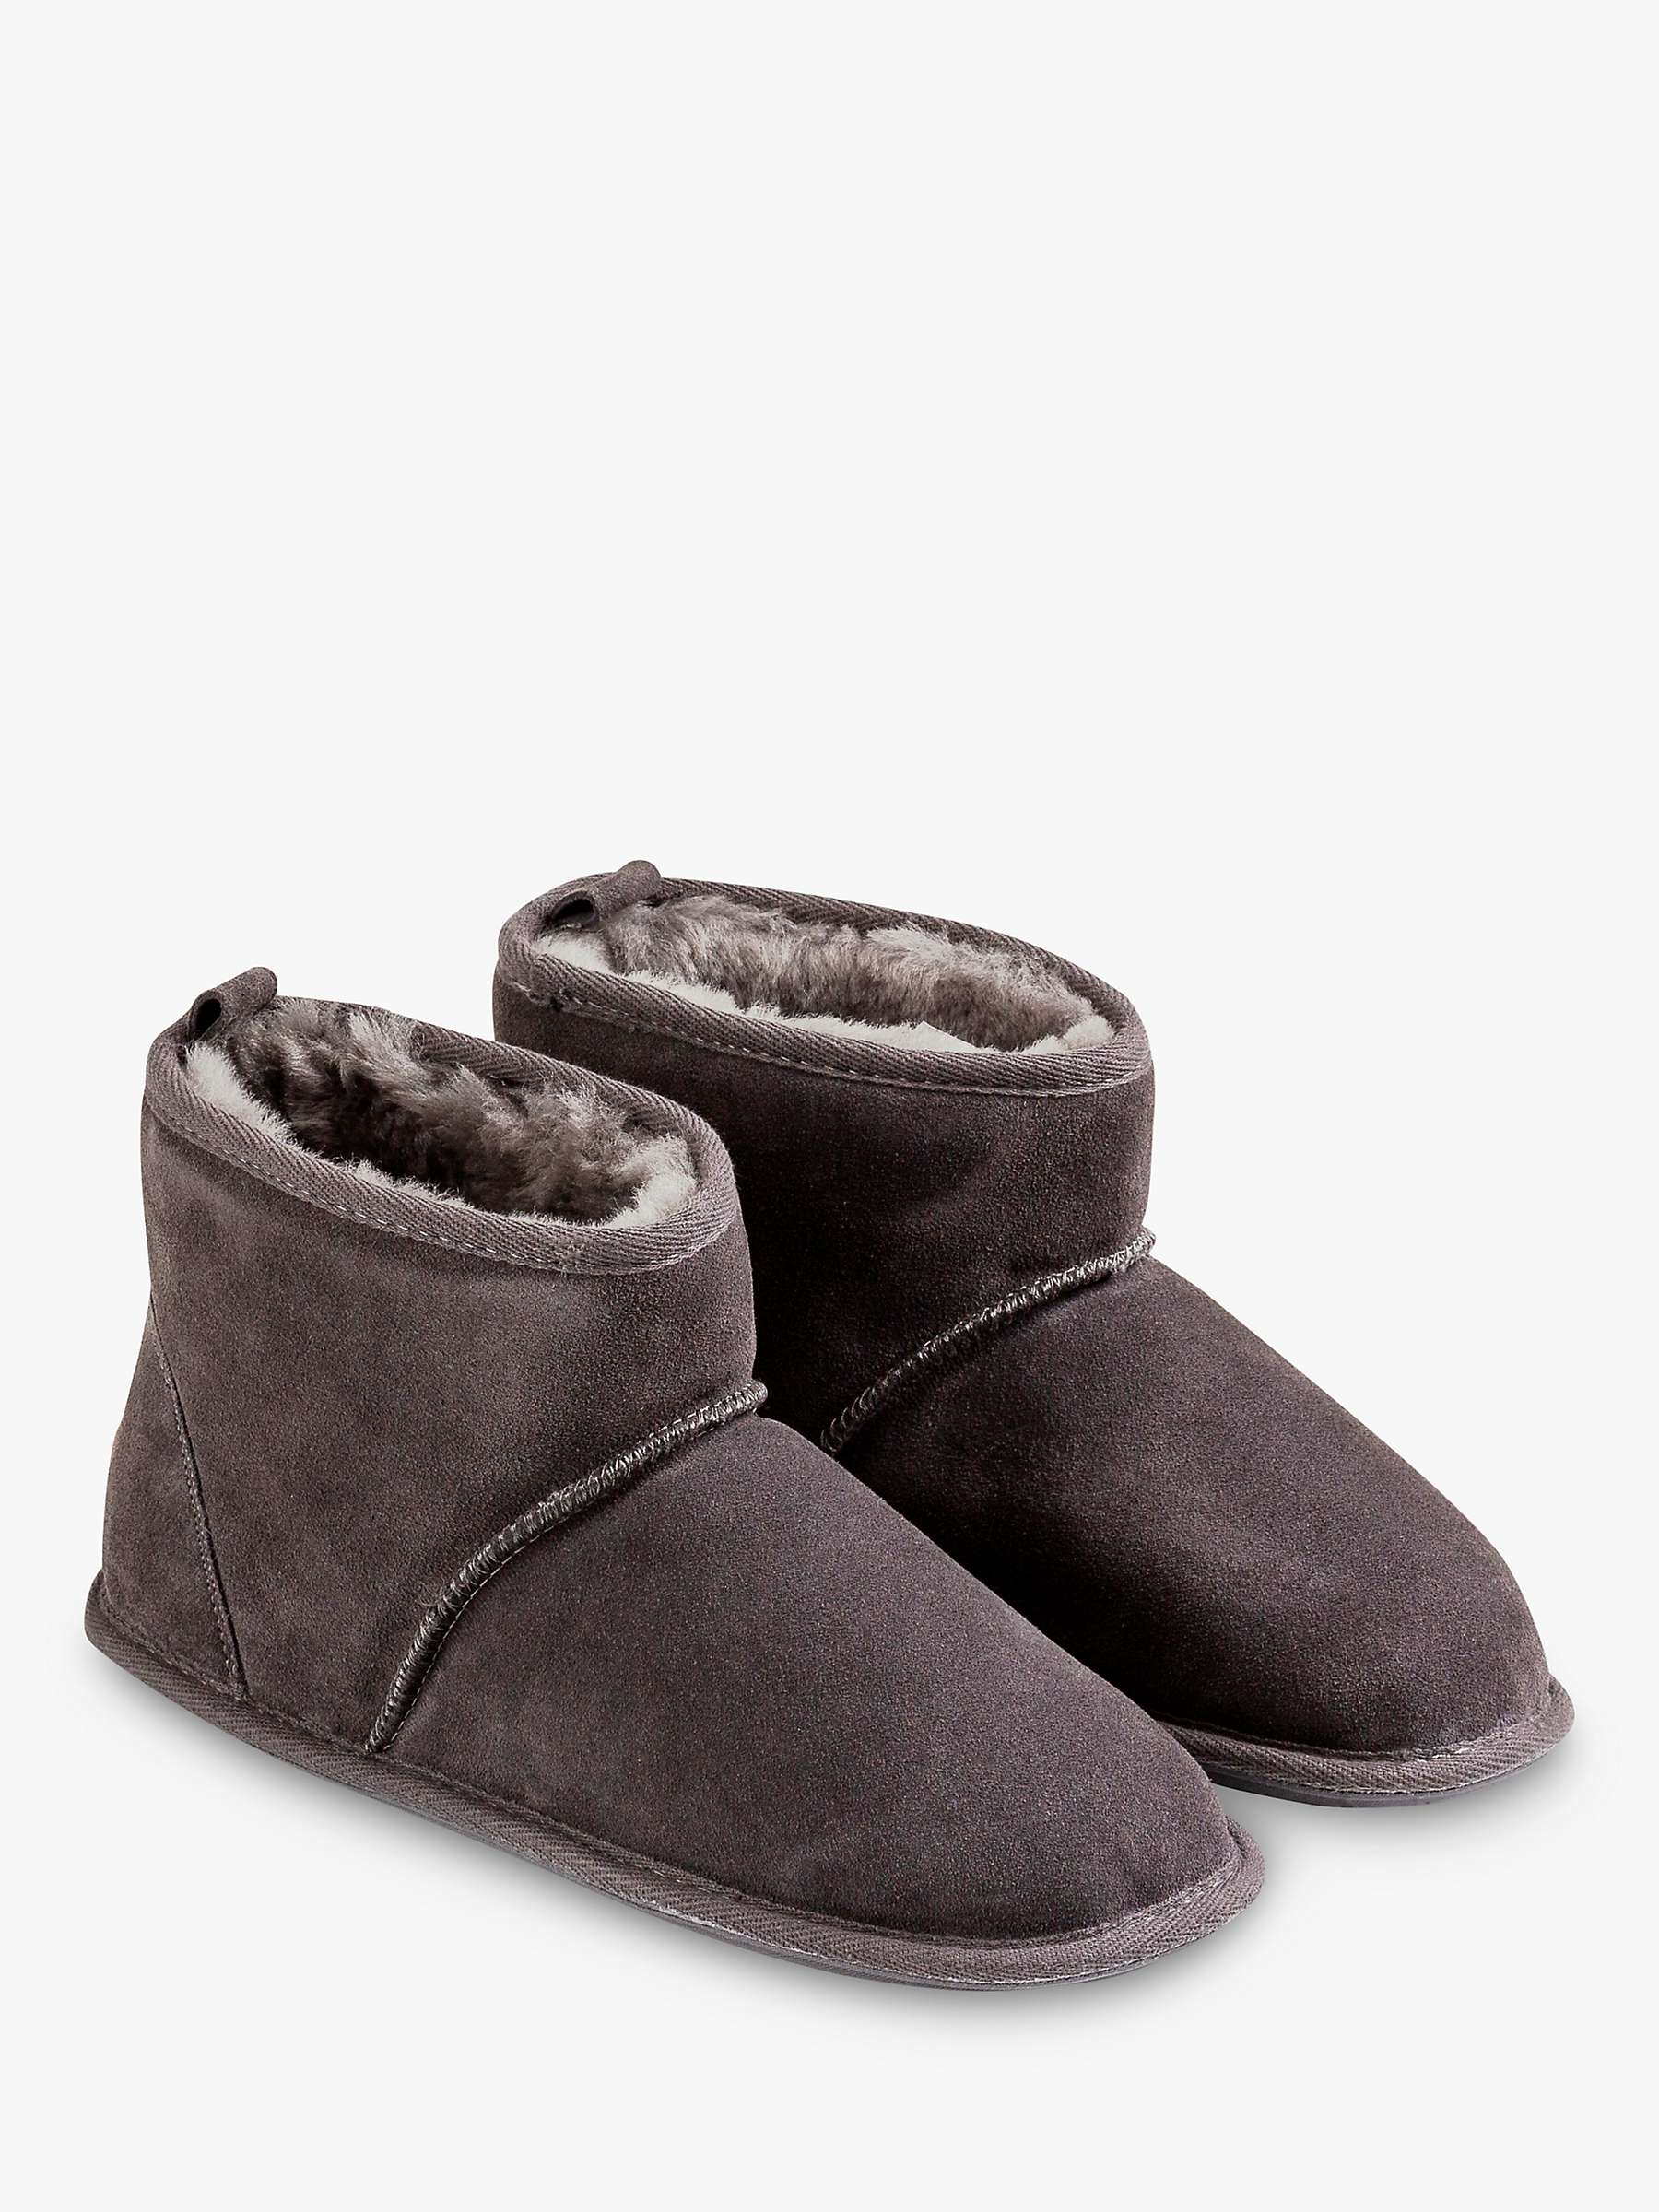 Buy Just Sheepskin Chester Sheepskin Boot Slippers Online at johnlewis.com